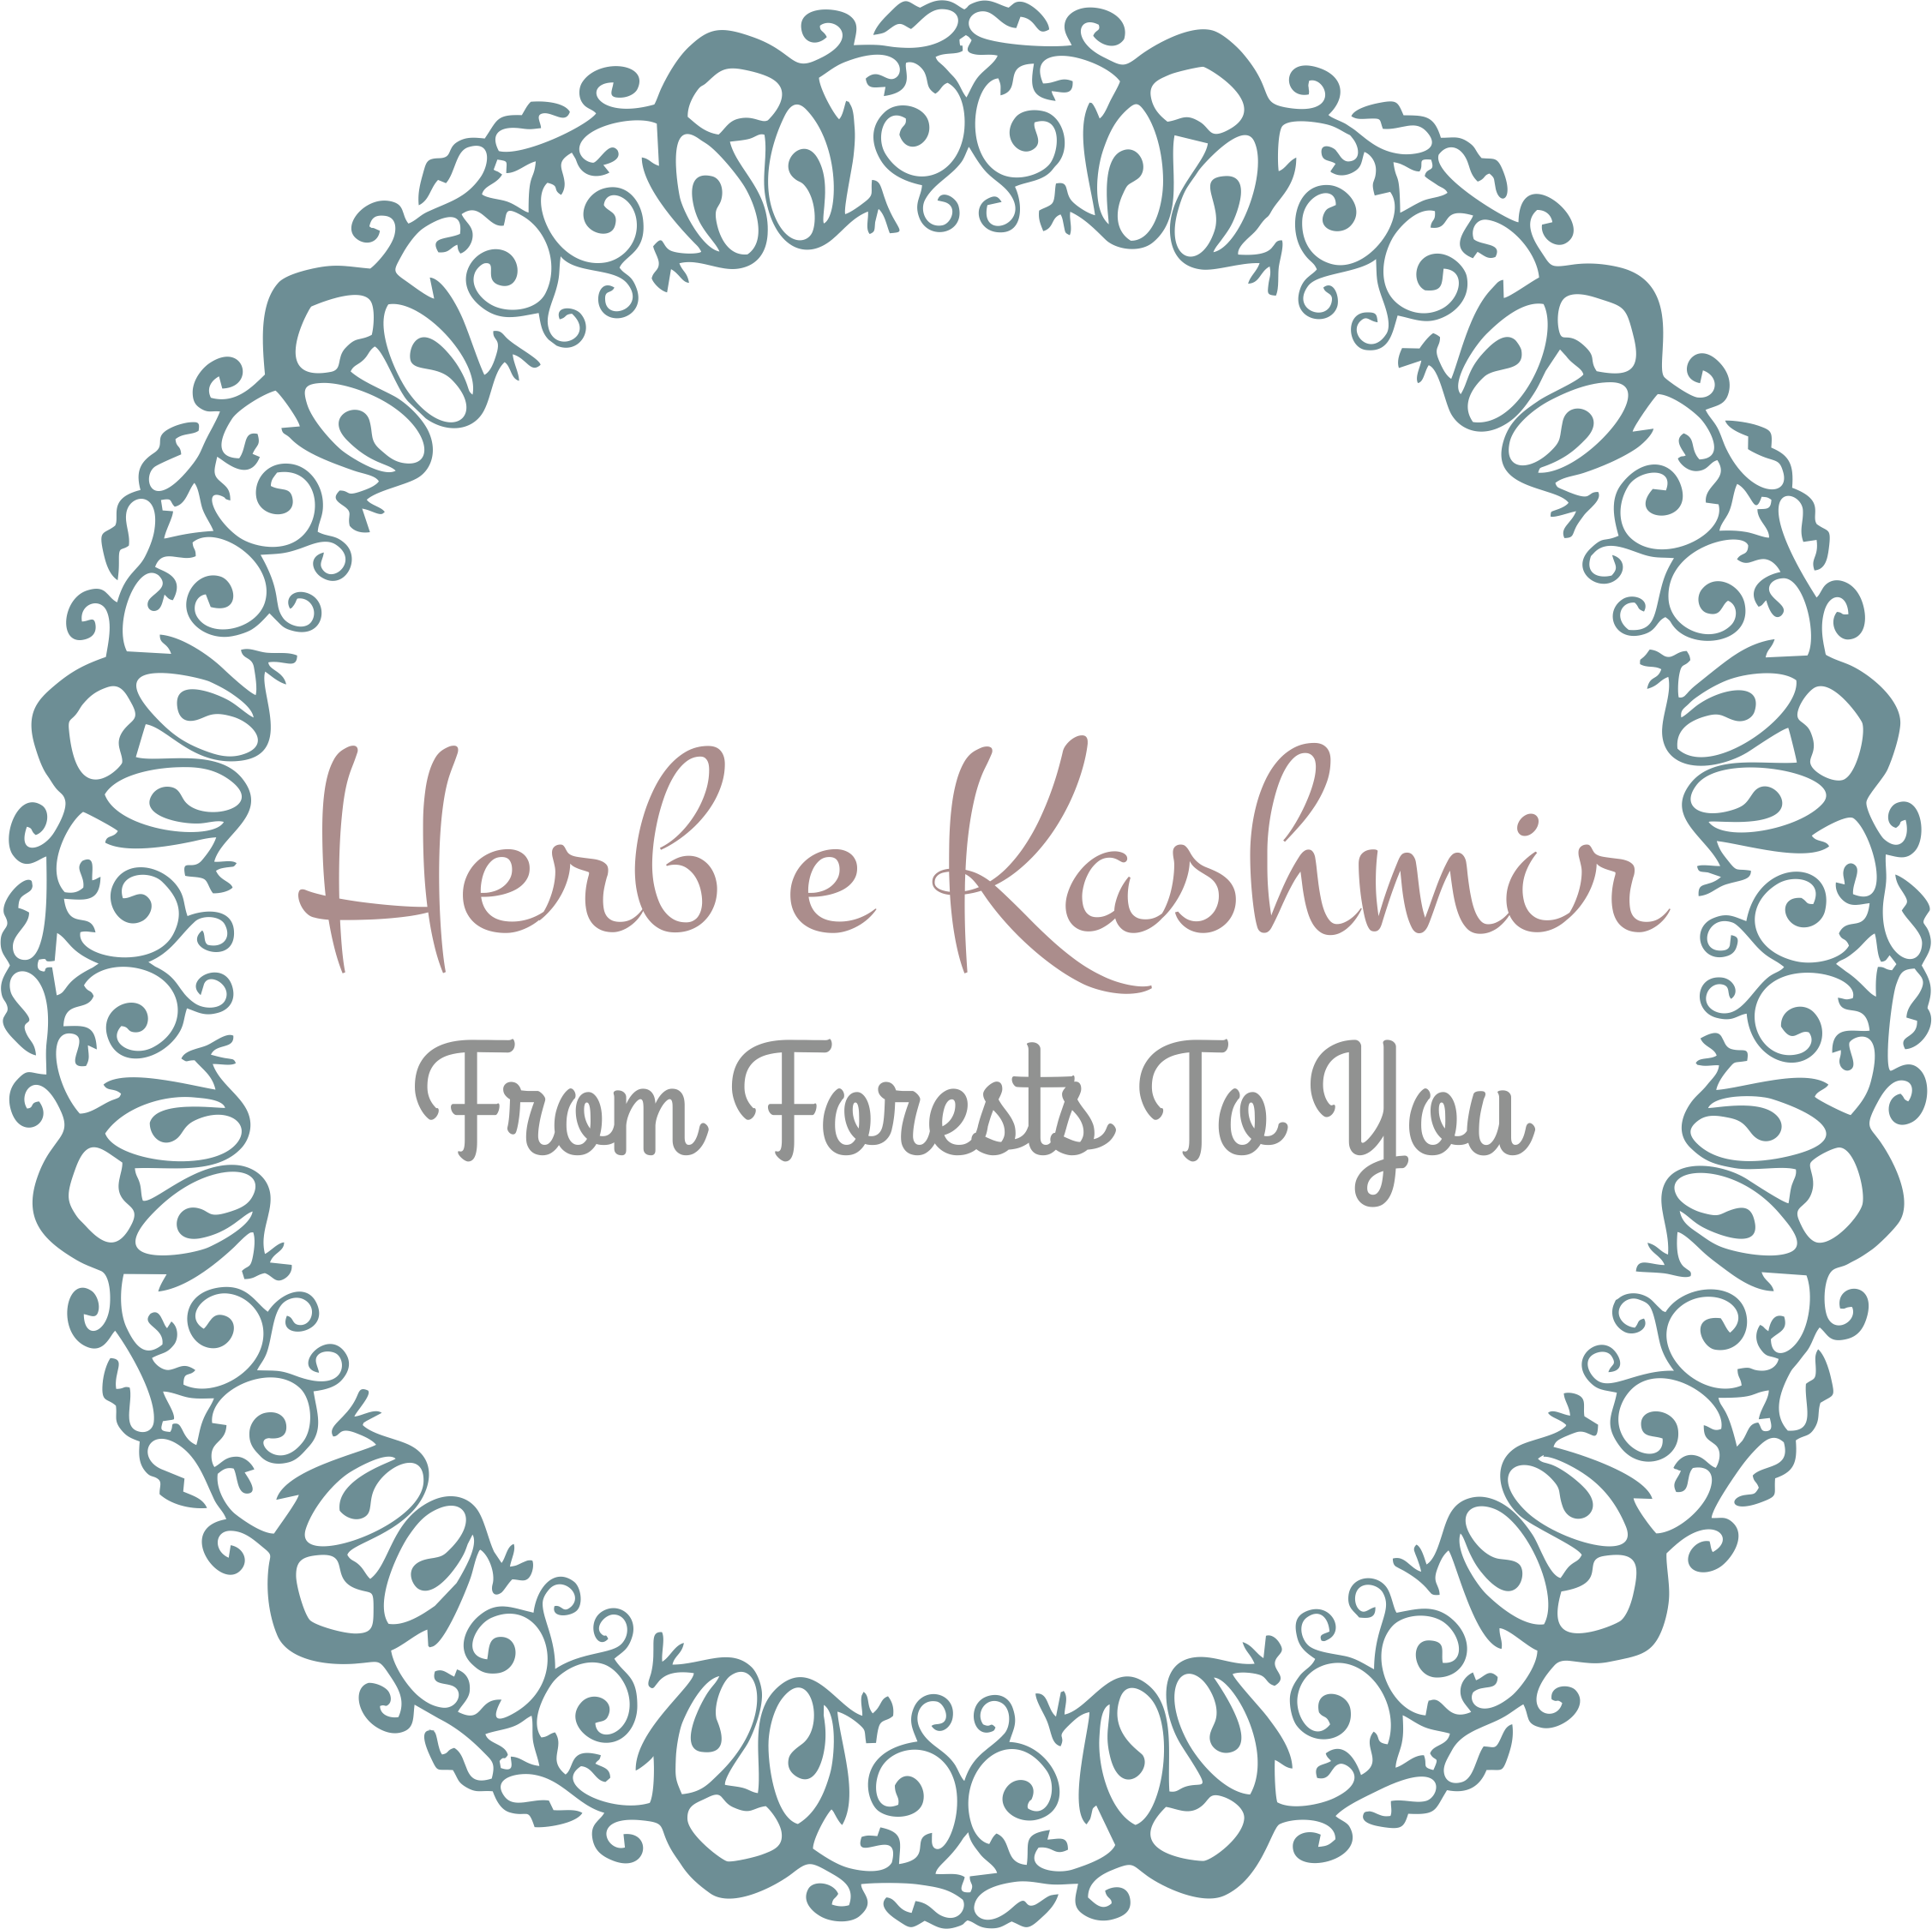 Herb-e-Kashmir